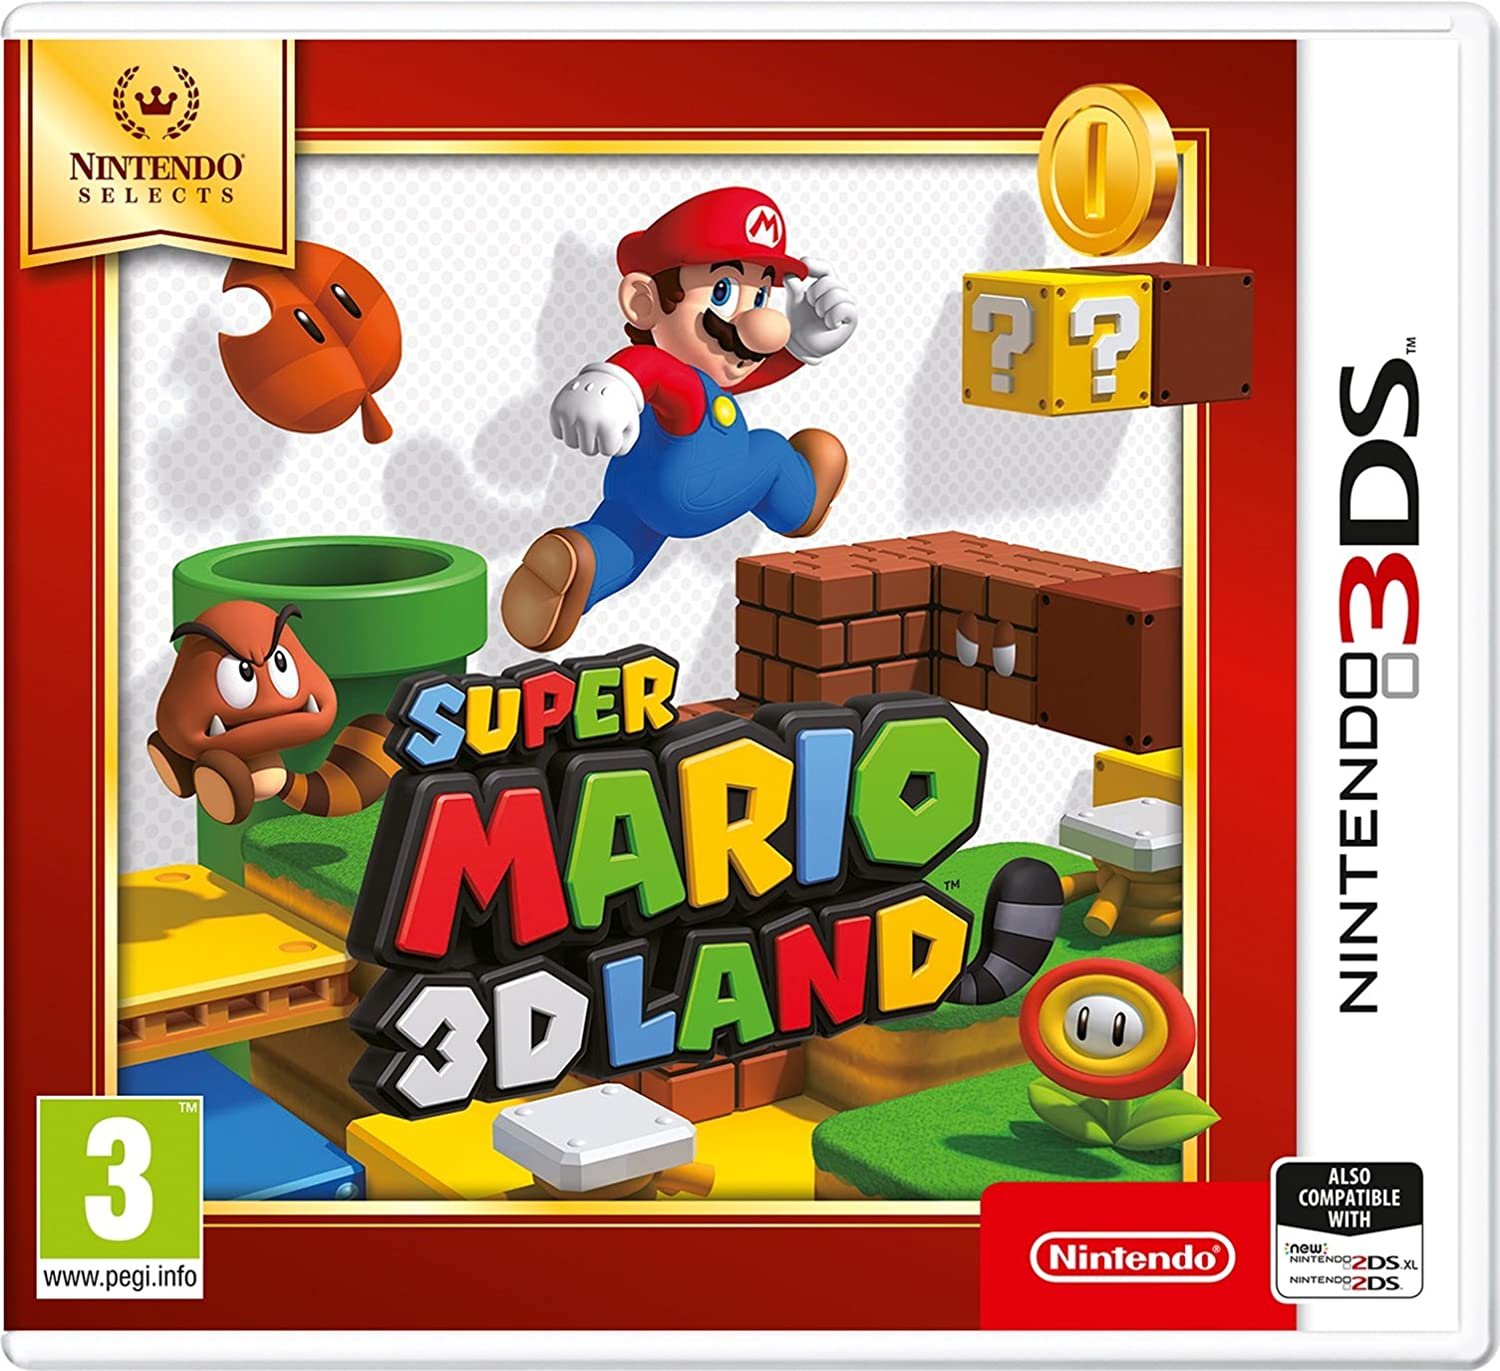 Nintendo Selects - Super Mario 3D Land Nintendo 3DS - image 1 of 9